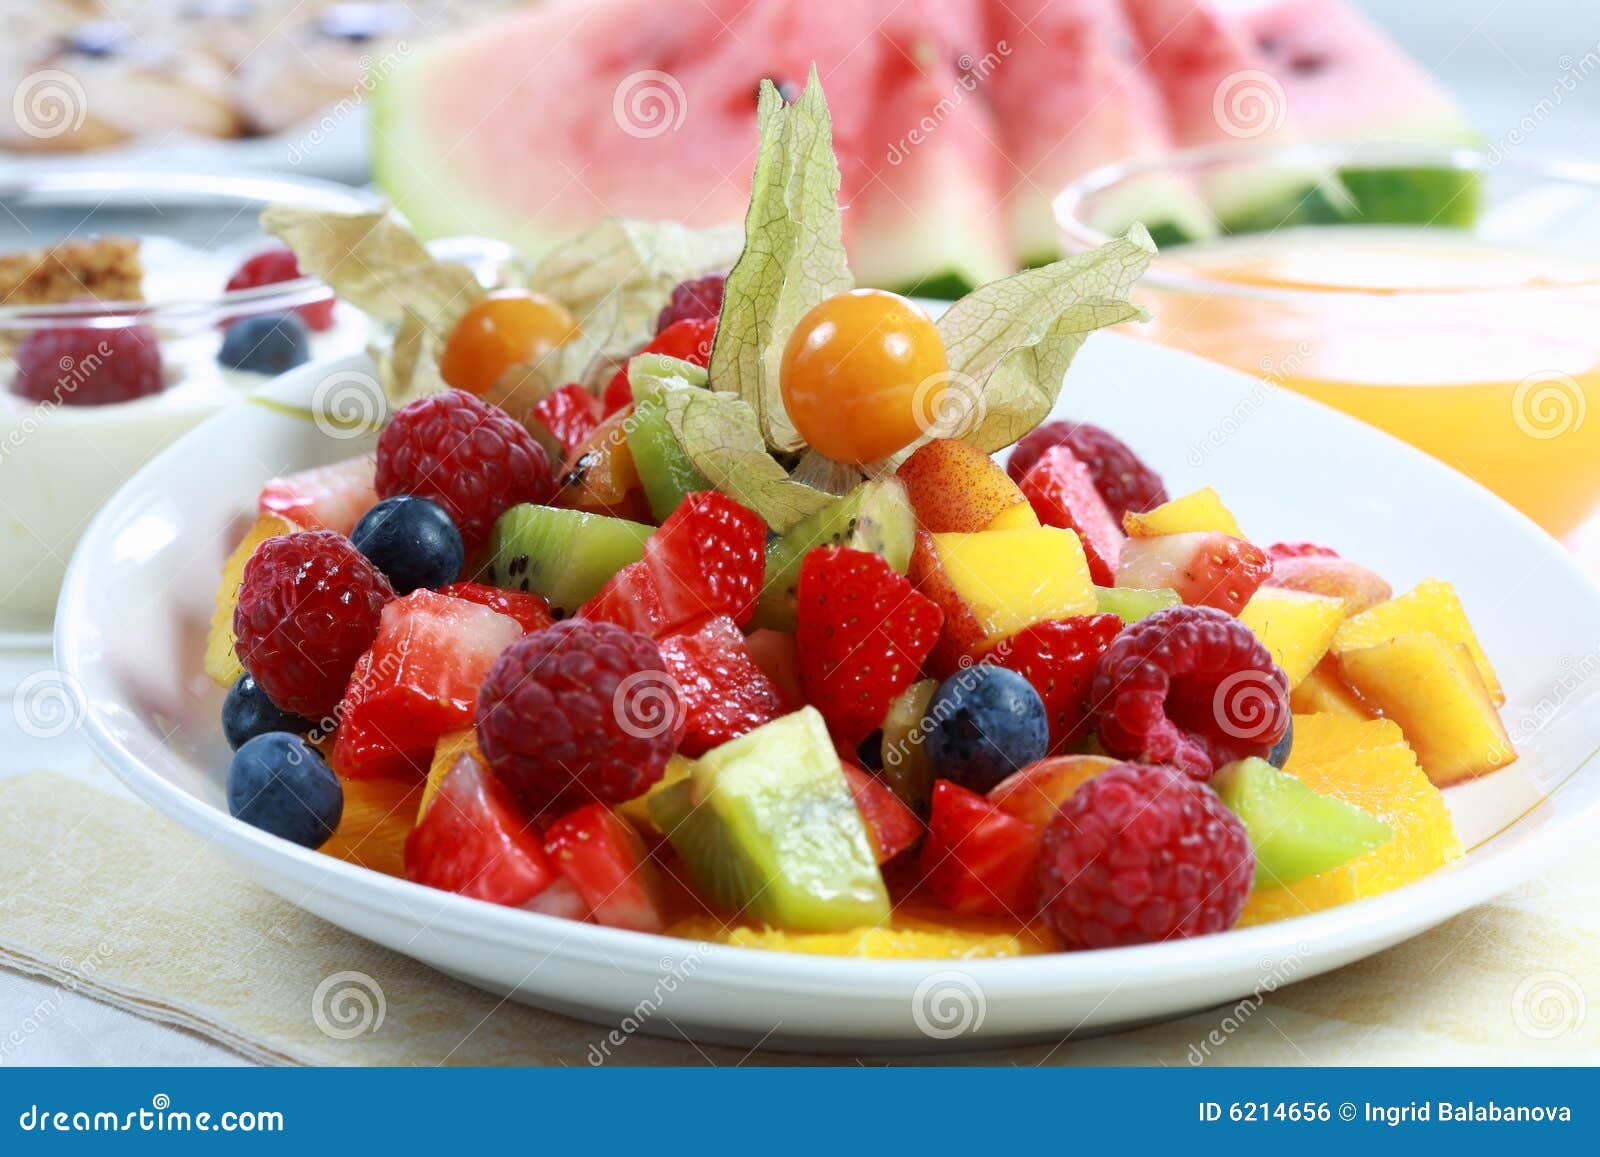 summer refreshment - fruit salad